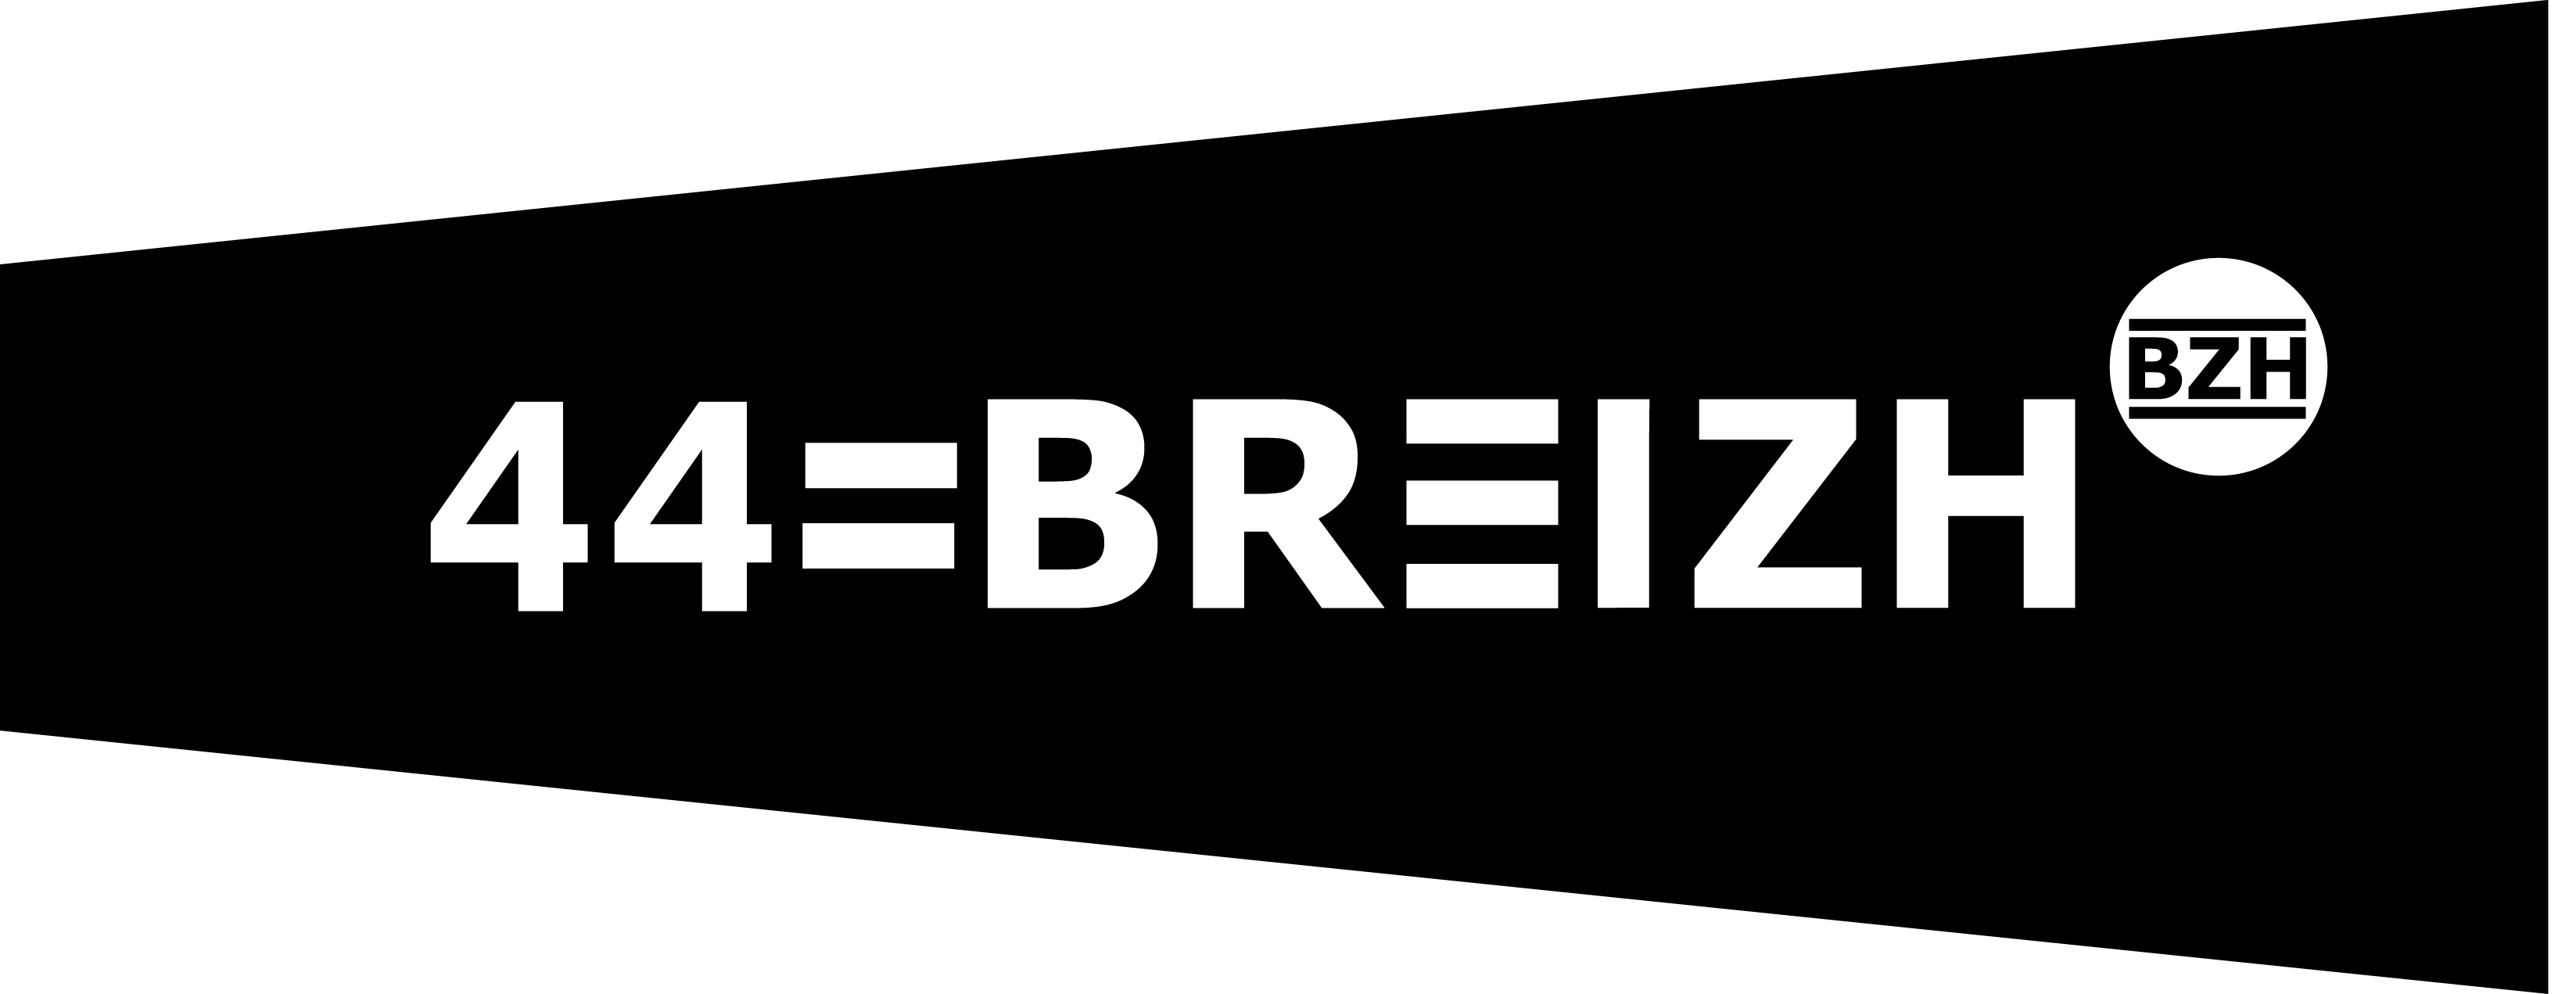 http://44breizh.files.wordpress.com/2011/02/logo-44breizh-vs-marque-bretagne.jpg